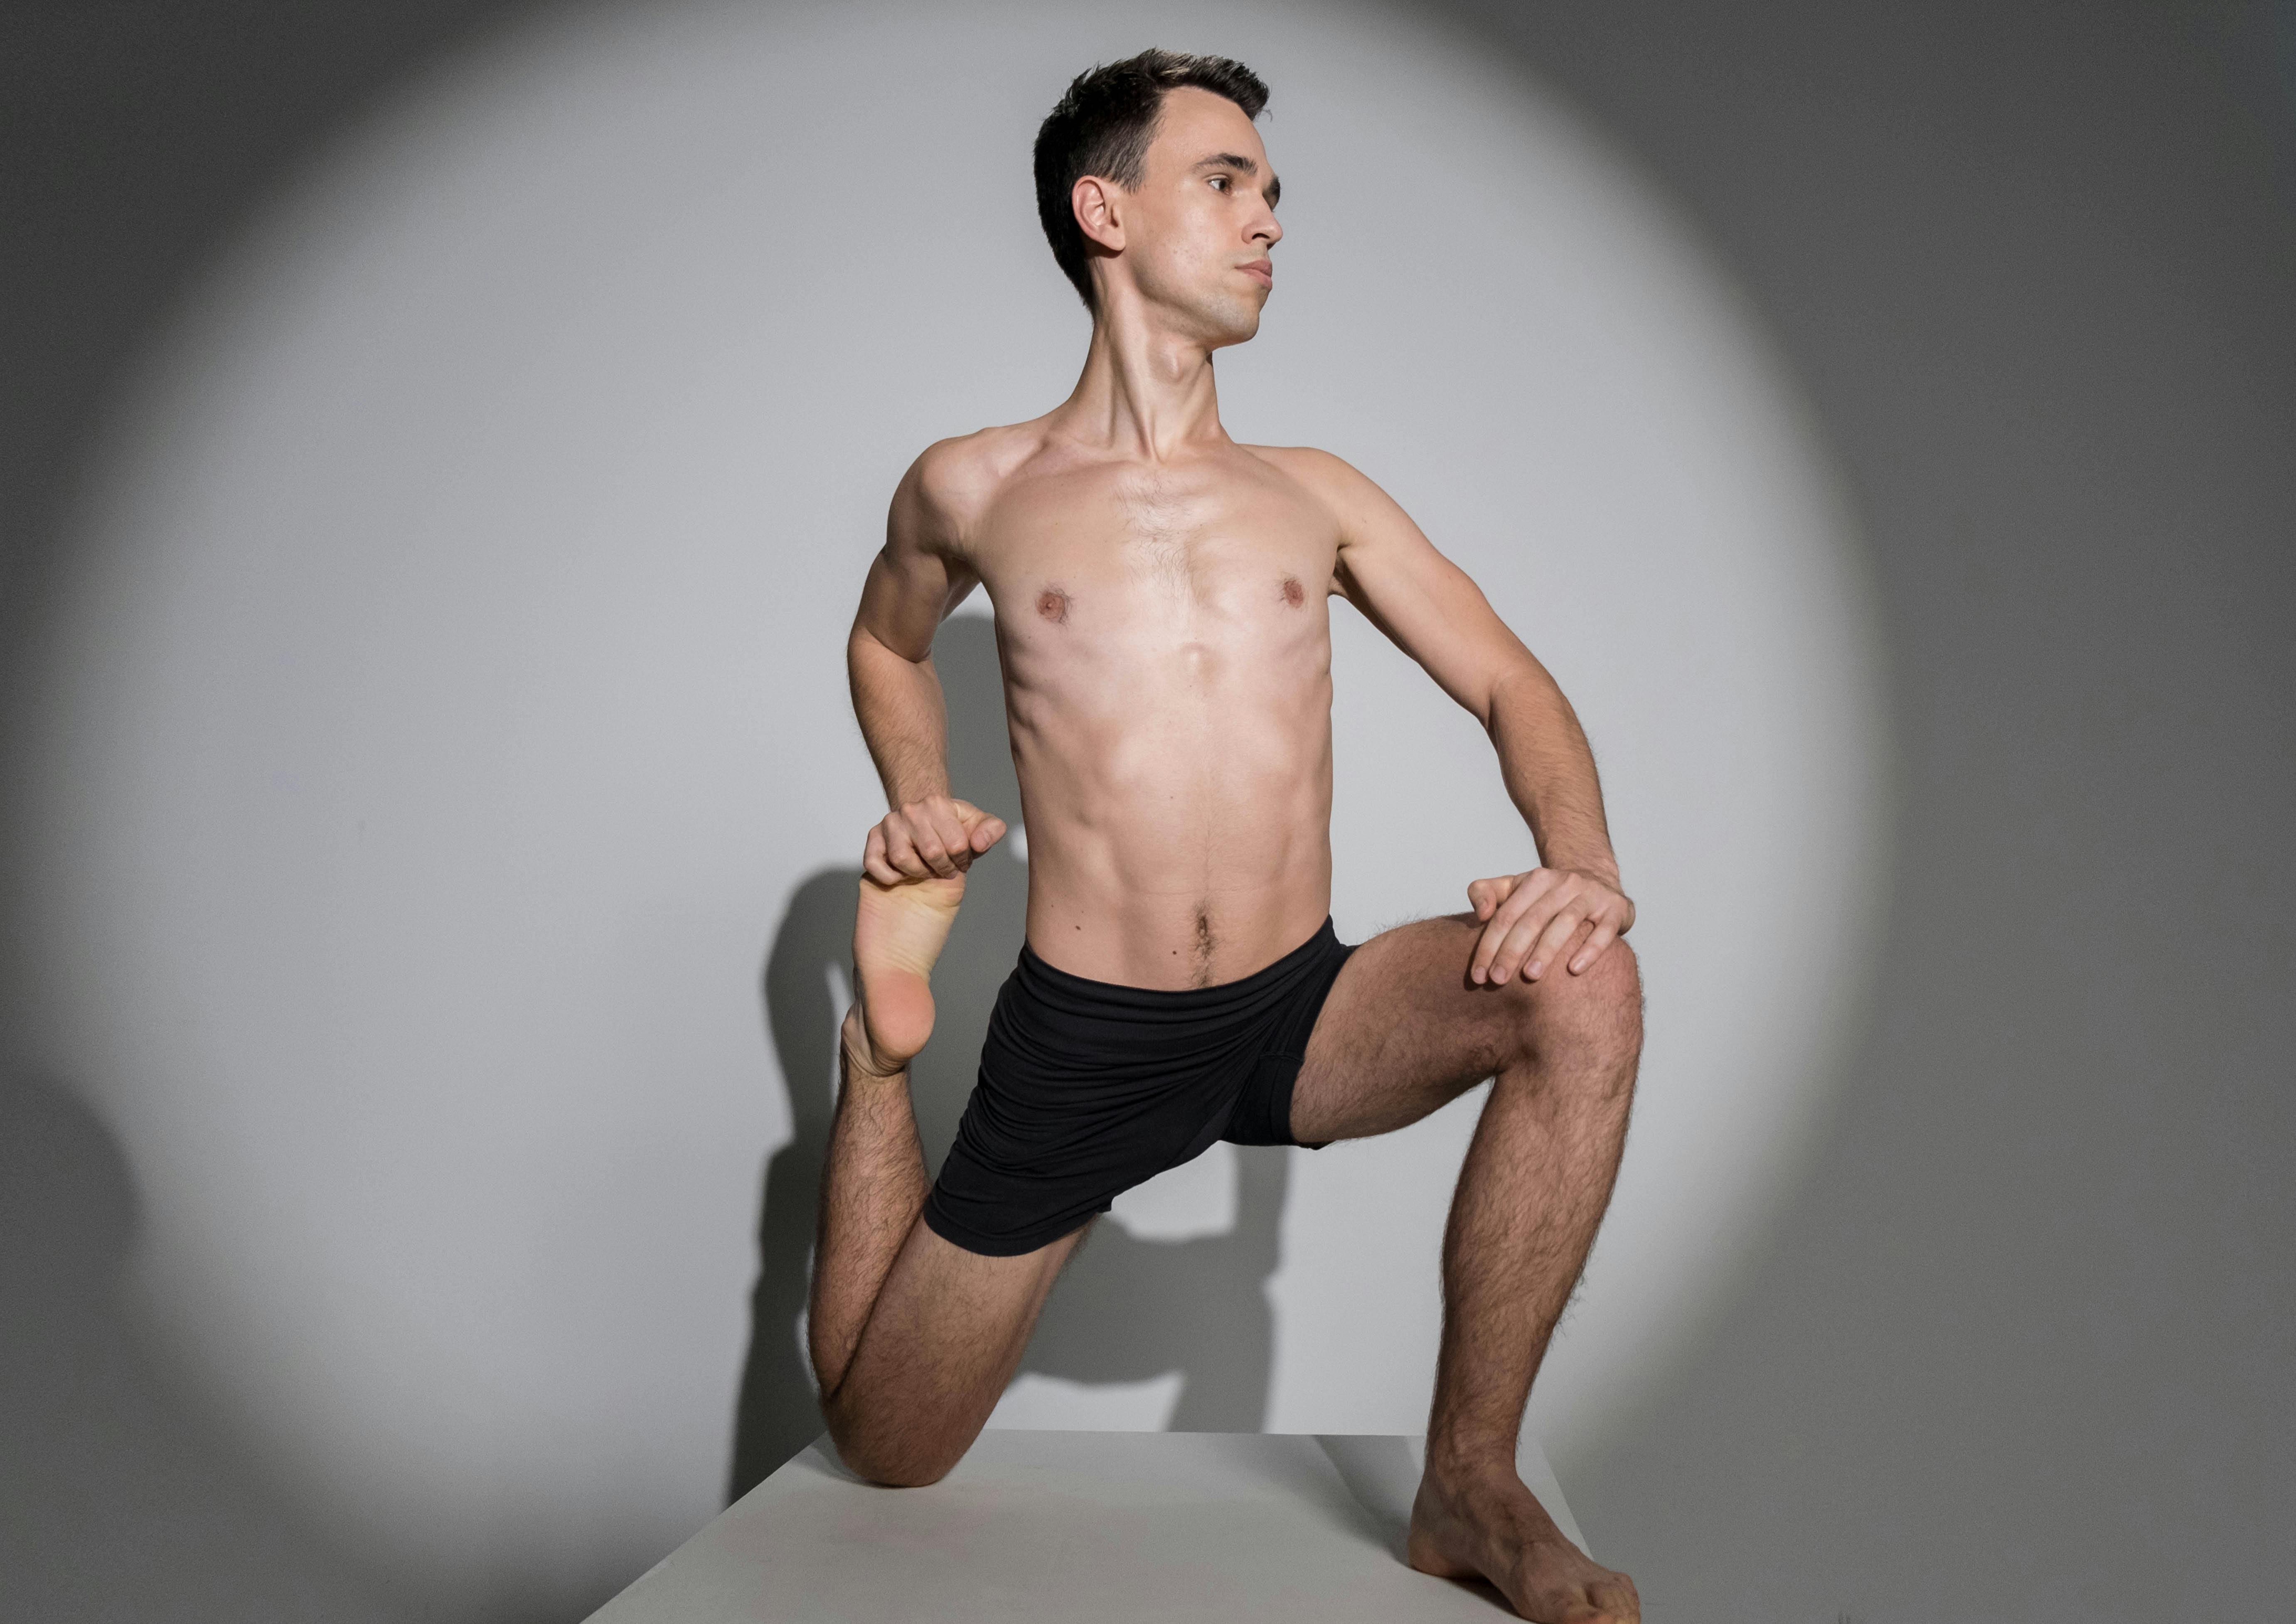 Pin by Mario tokar on poses | Life drawing pose, Human poses, Human anatomy  for artists